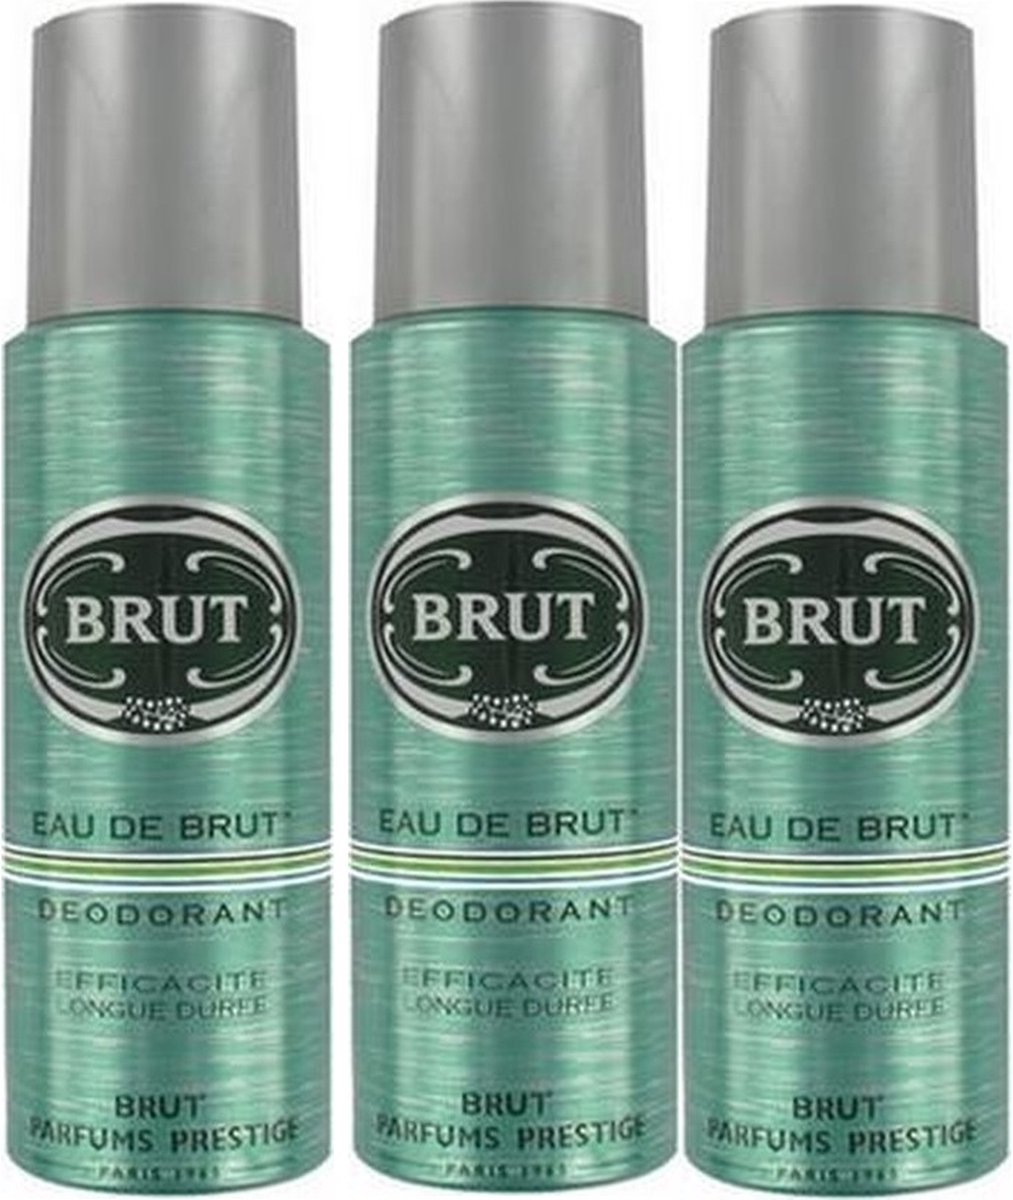 Brut Eau de Brut - 200 ml - Deodorant